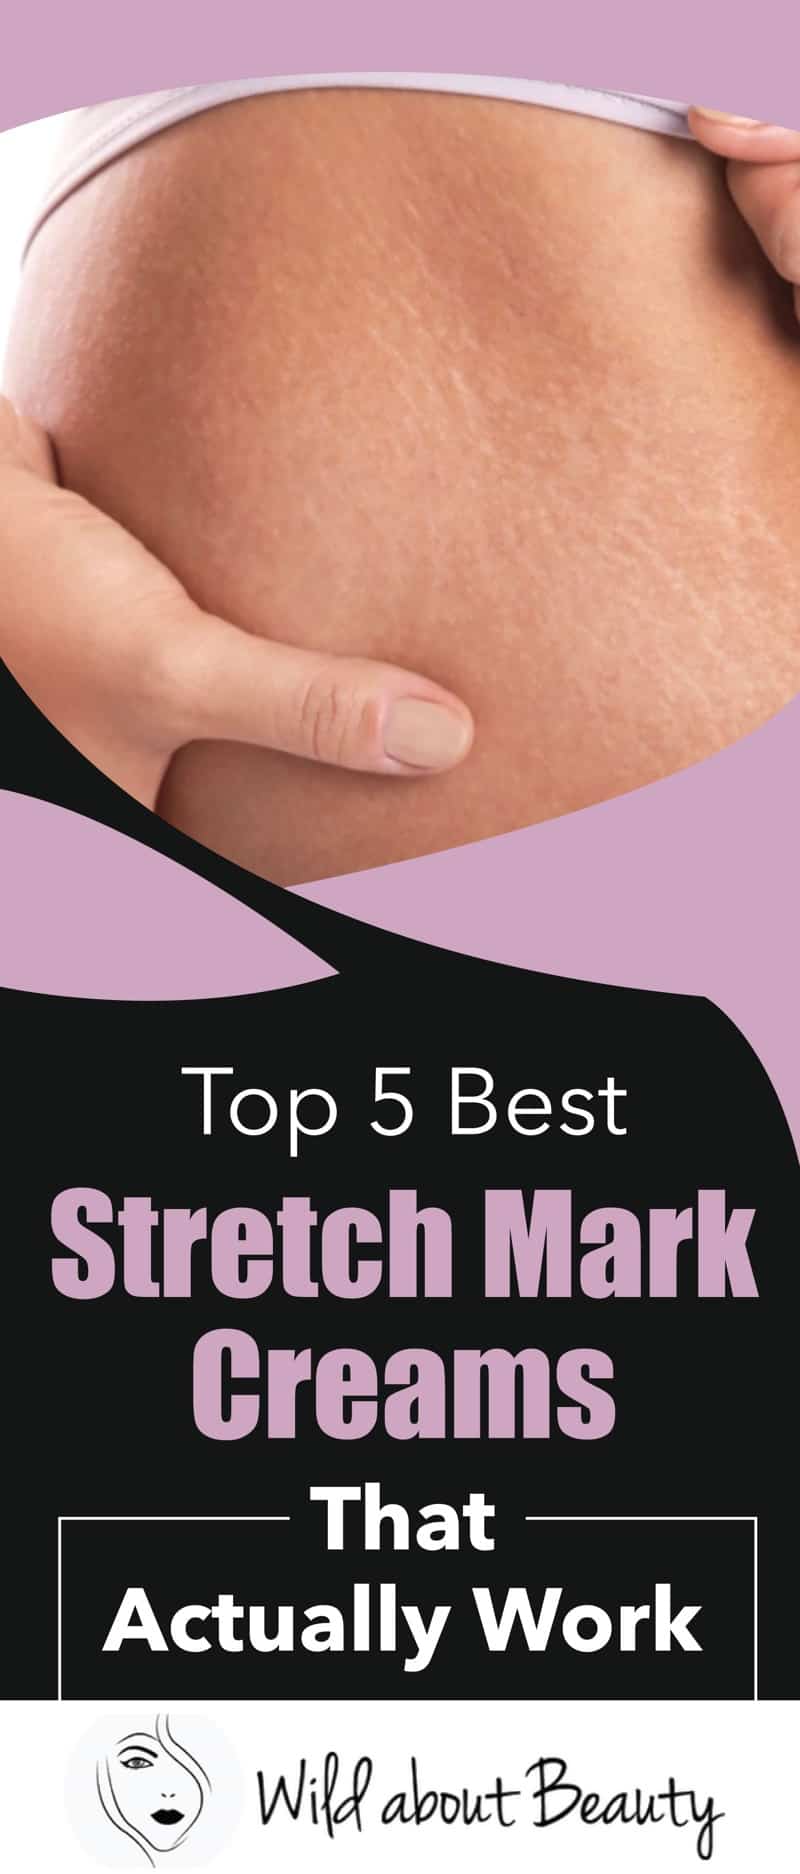 Top 5 Best Stretch Mark Creams